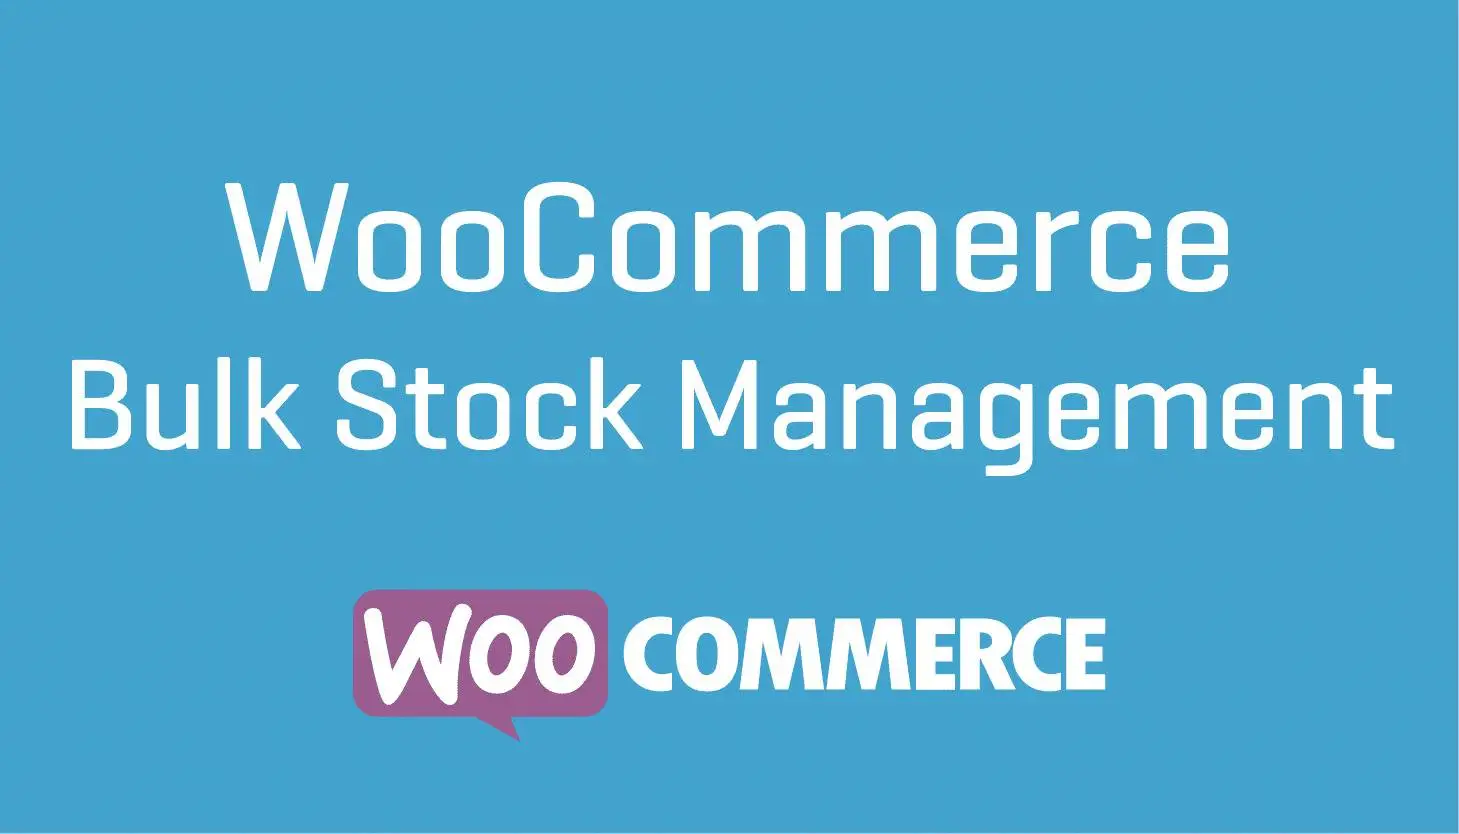 Download the WooCommerce Bulk Stock Management plugin